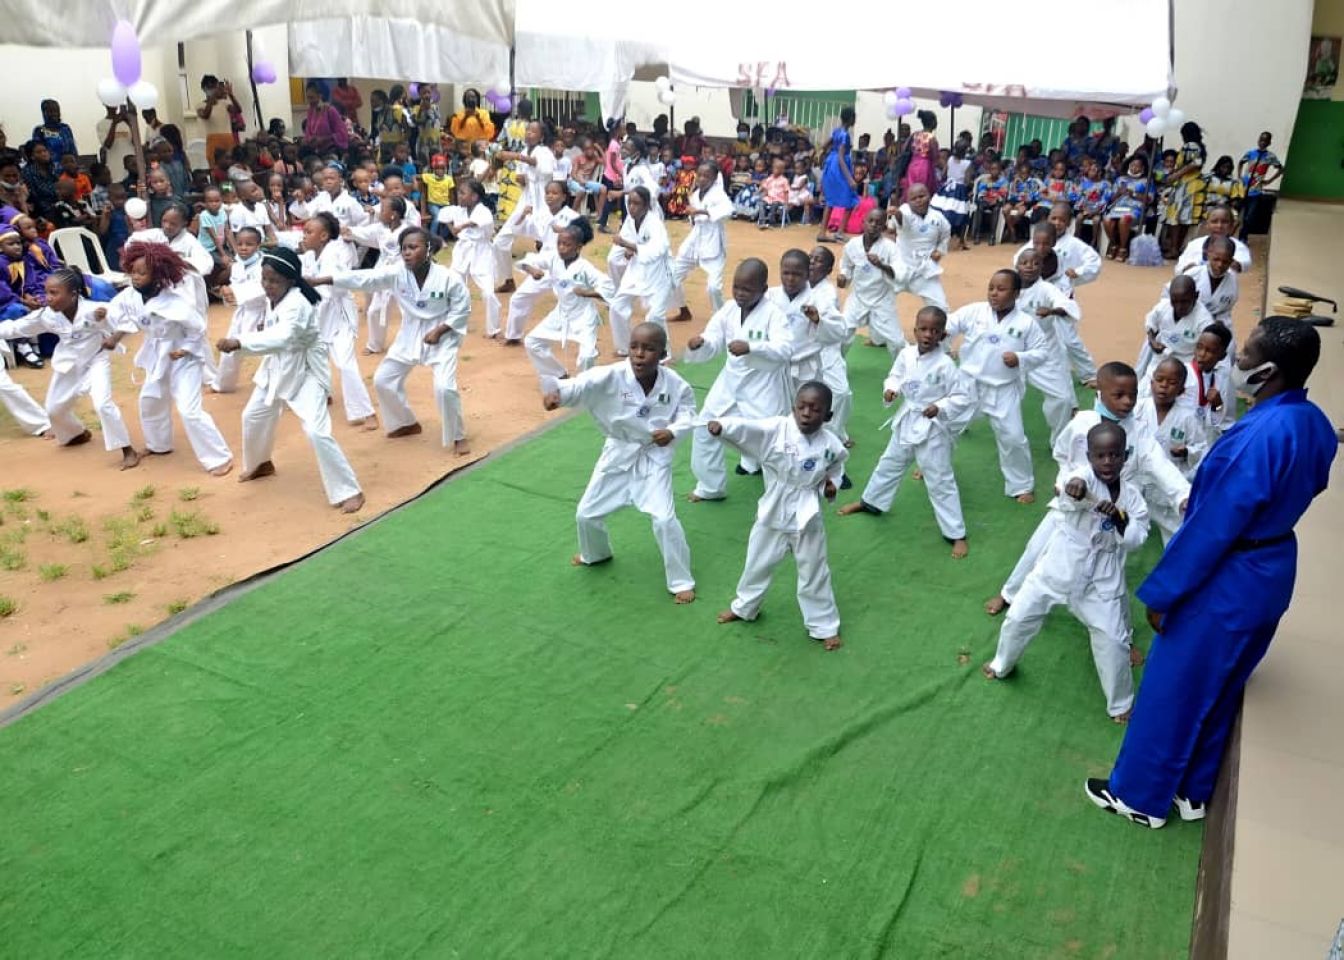 Taekwondo Club in action